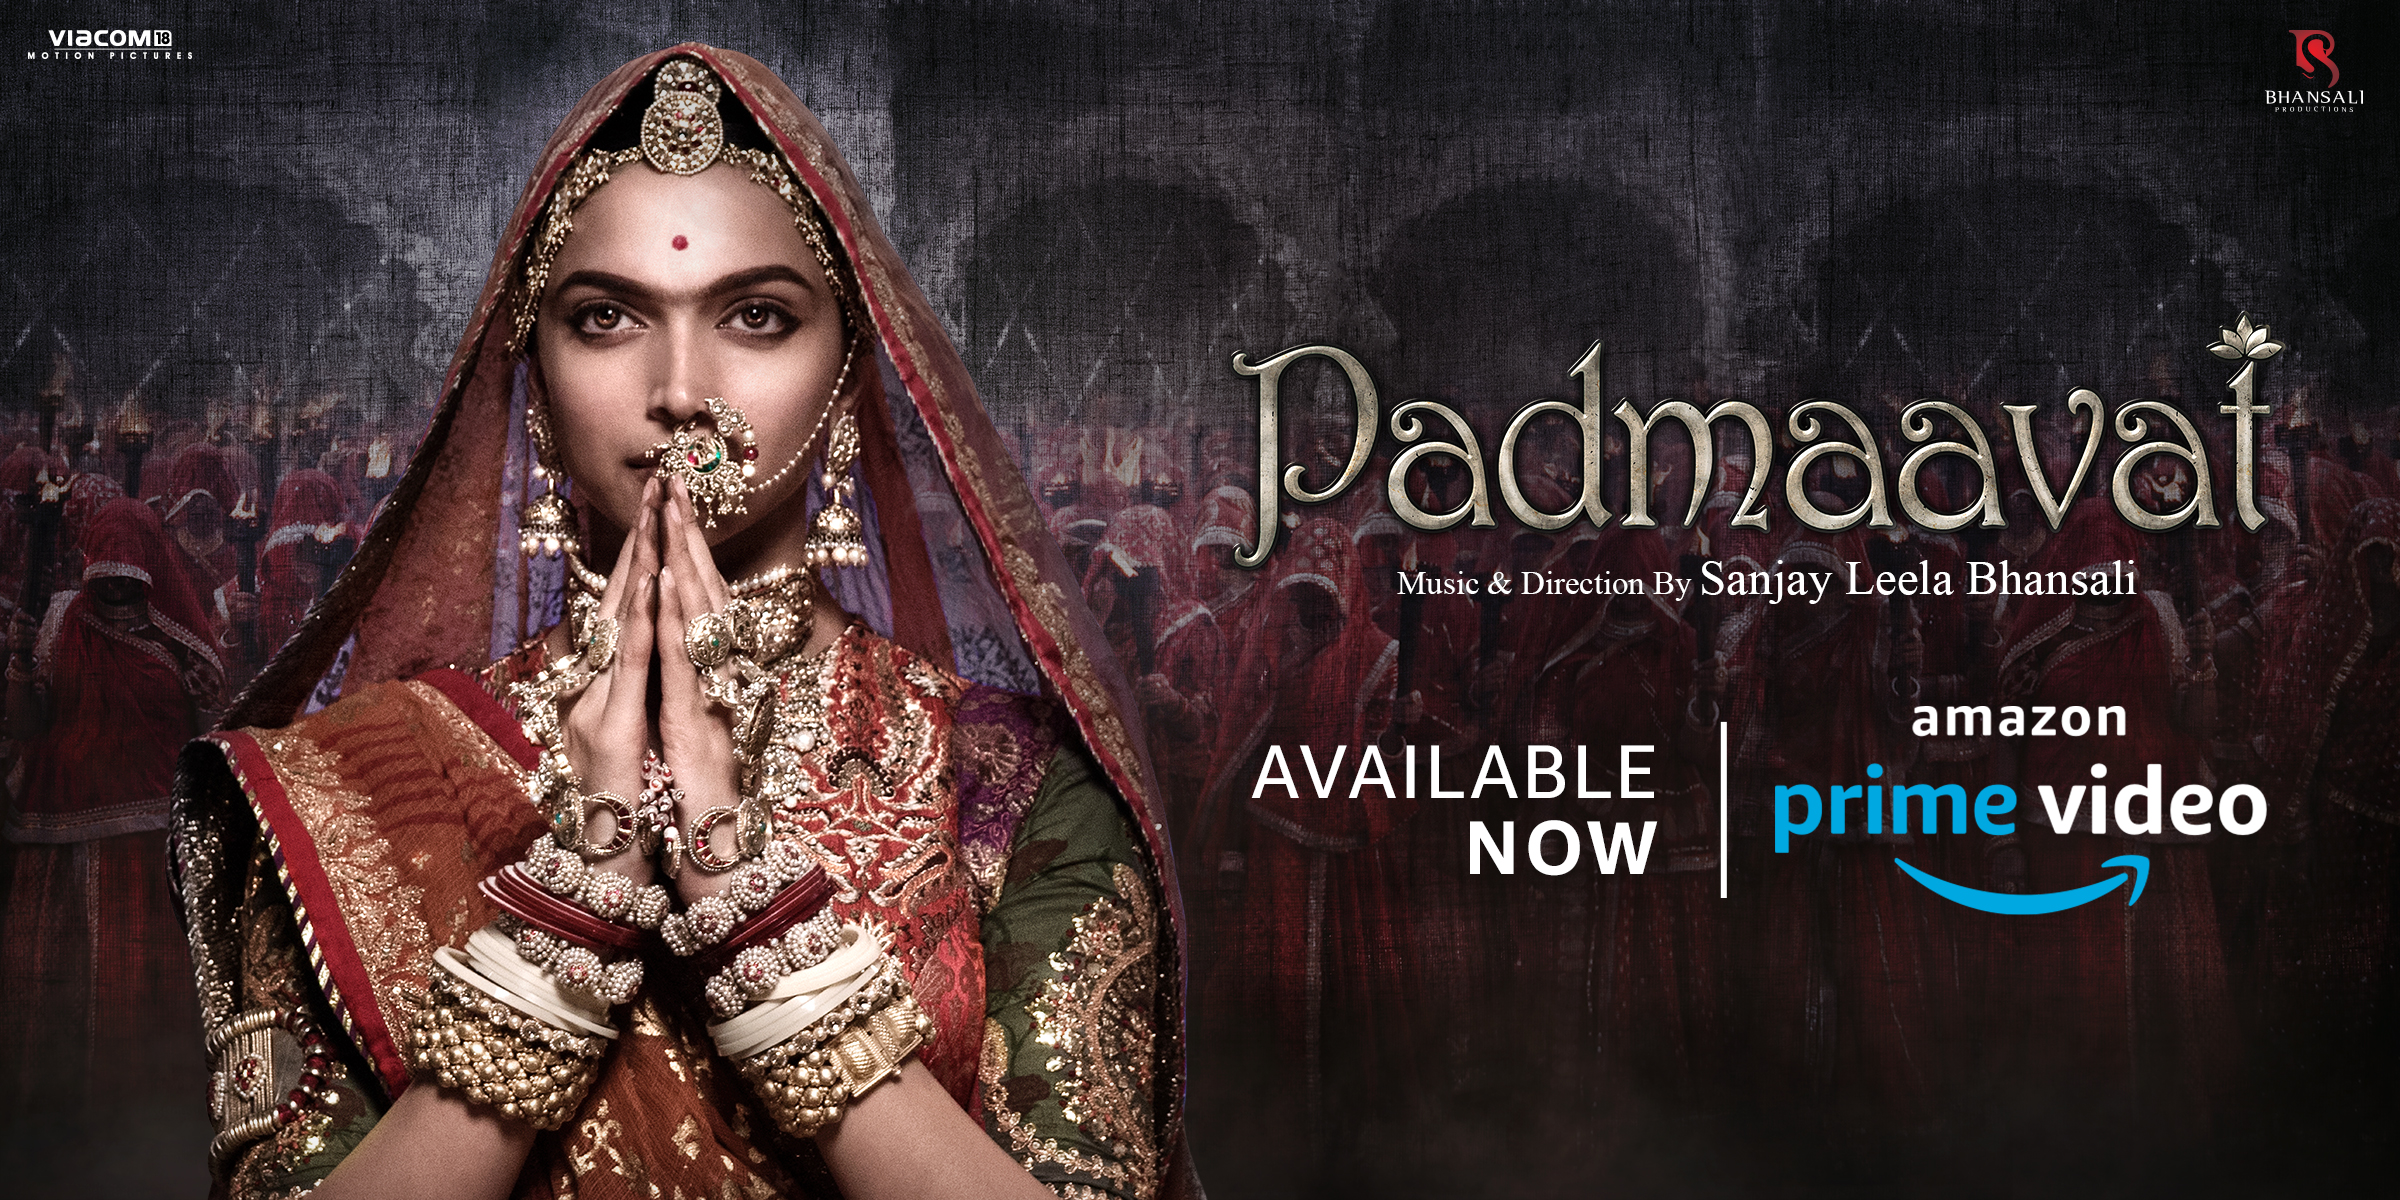 Sanjay Leela bhansalis Padmavat now available on Amazon Prime Video India